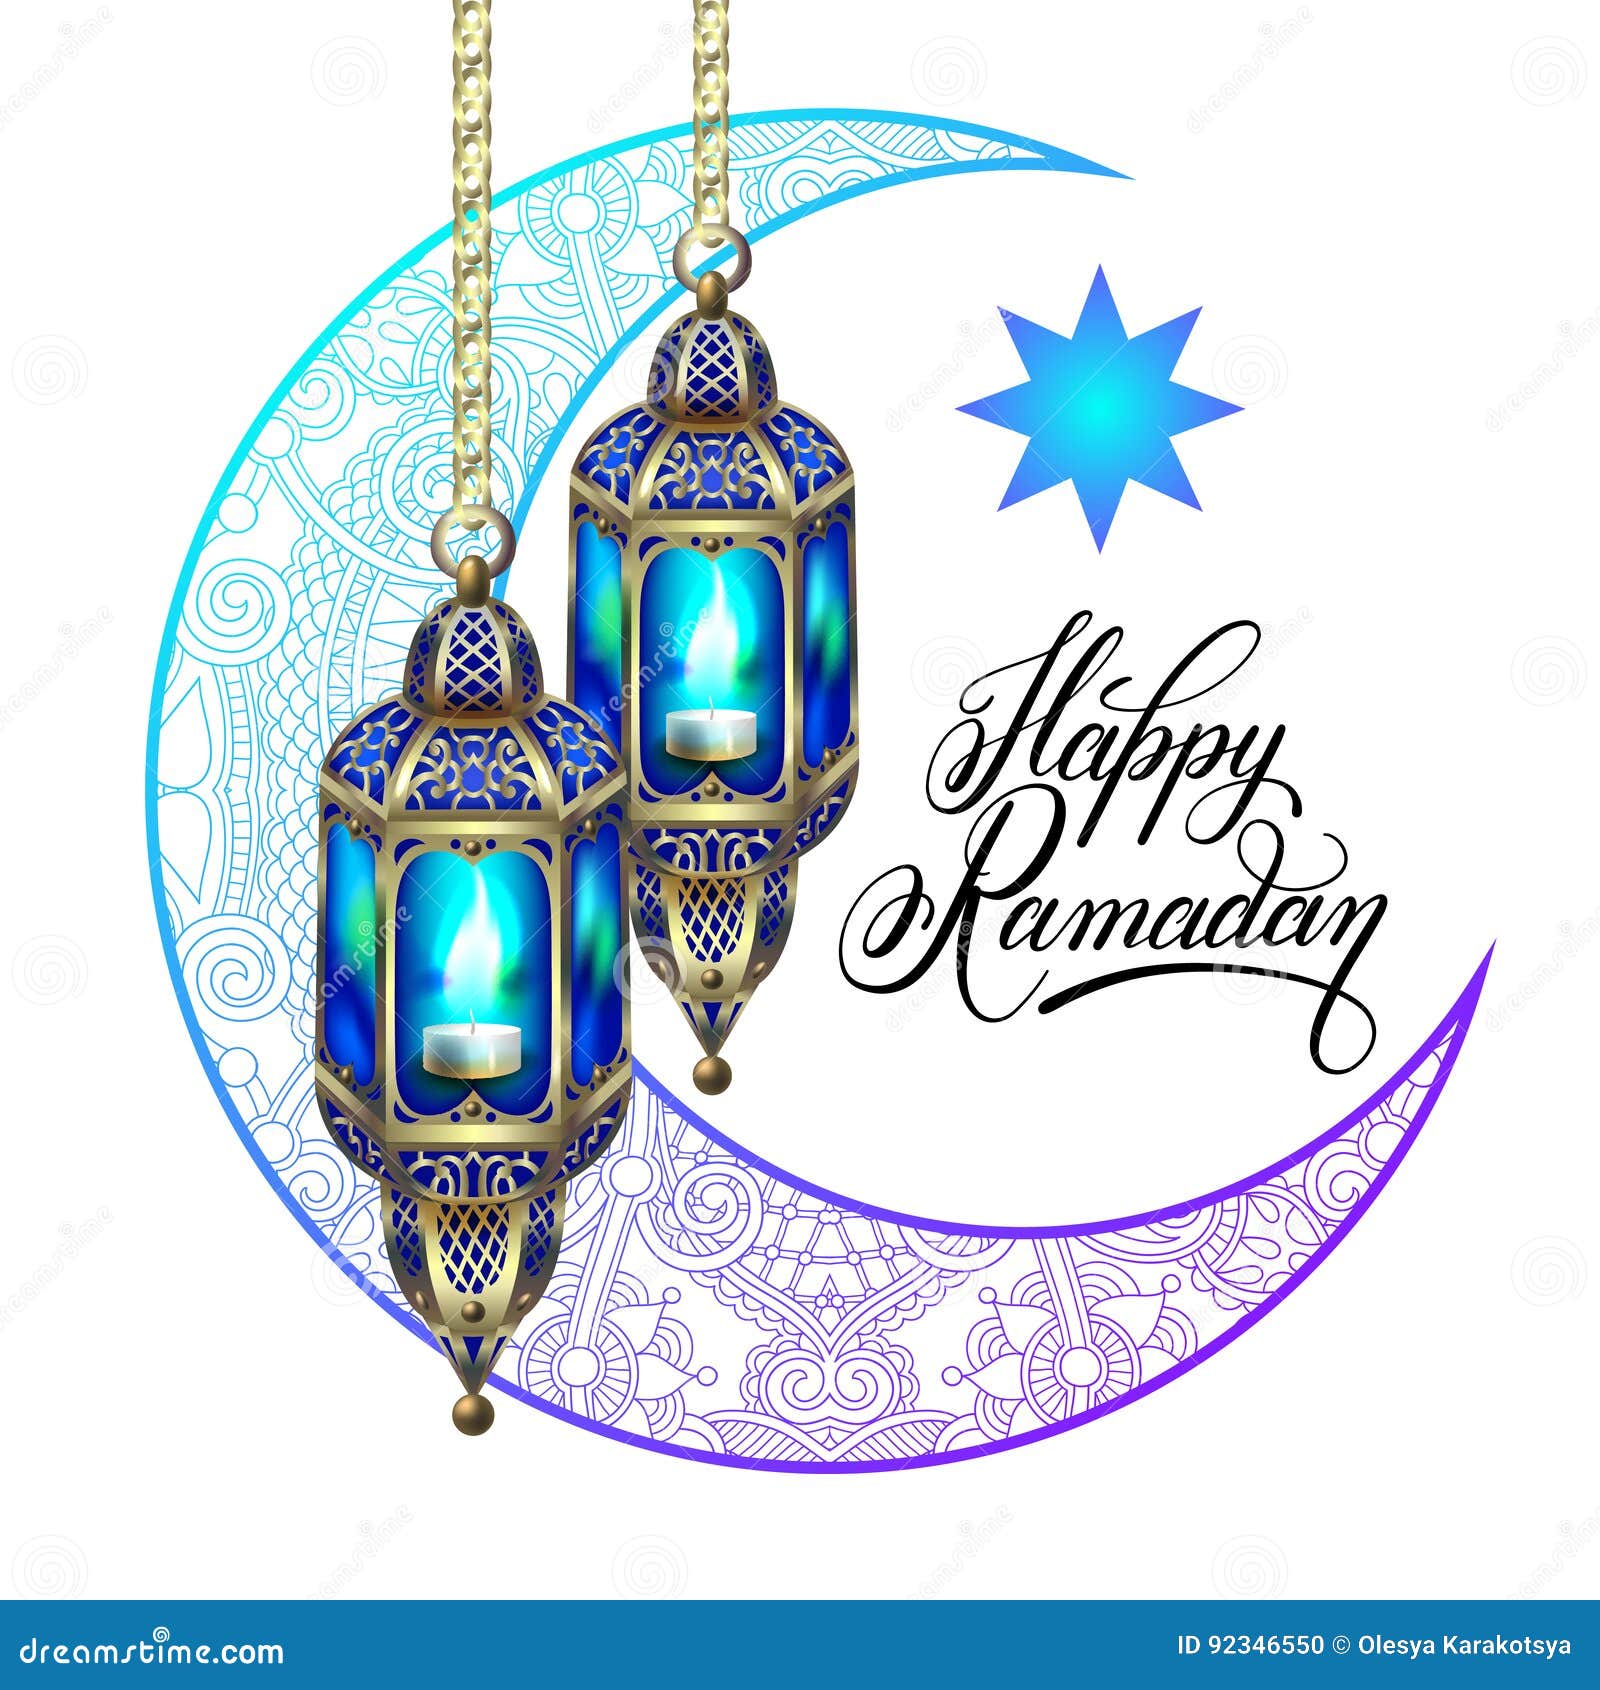 Happy Ramadan Design For Greeting Card Stock Vector Illustration Of